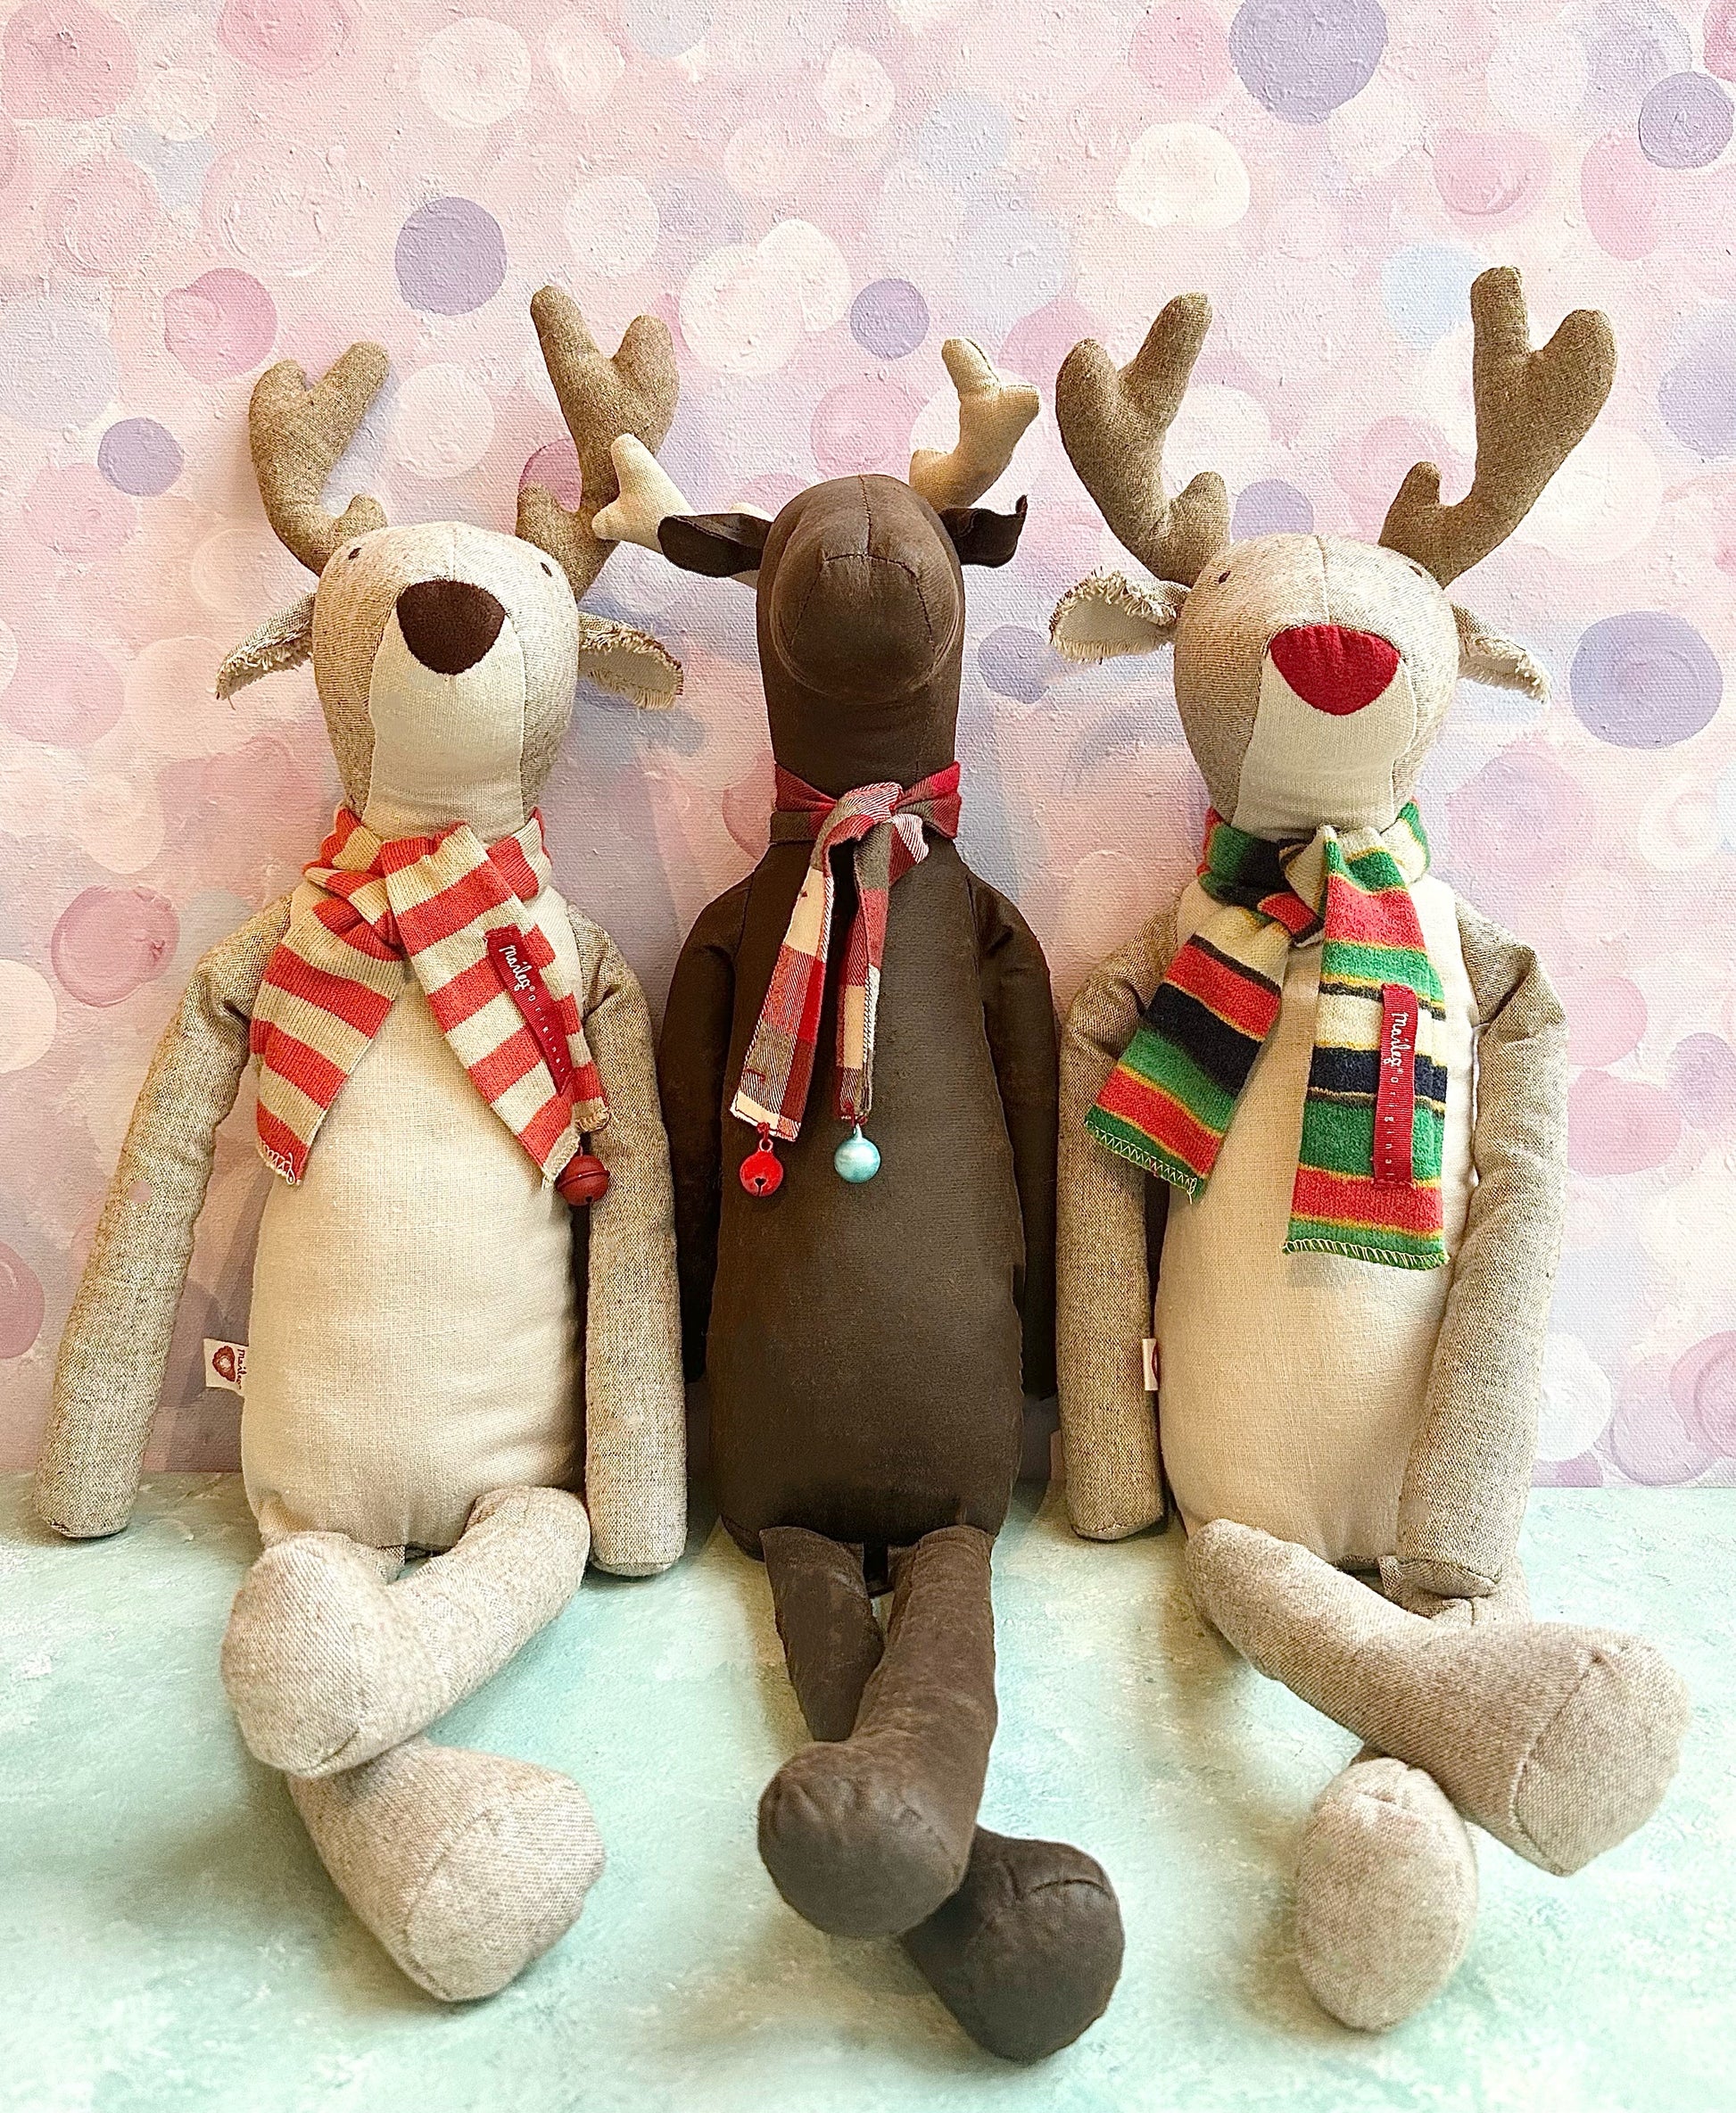 Medium Chocolate Reindeer - 2011